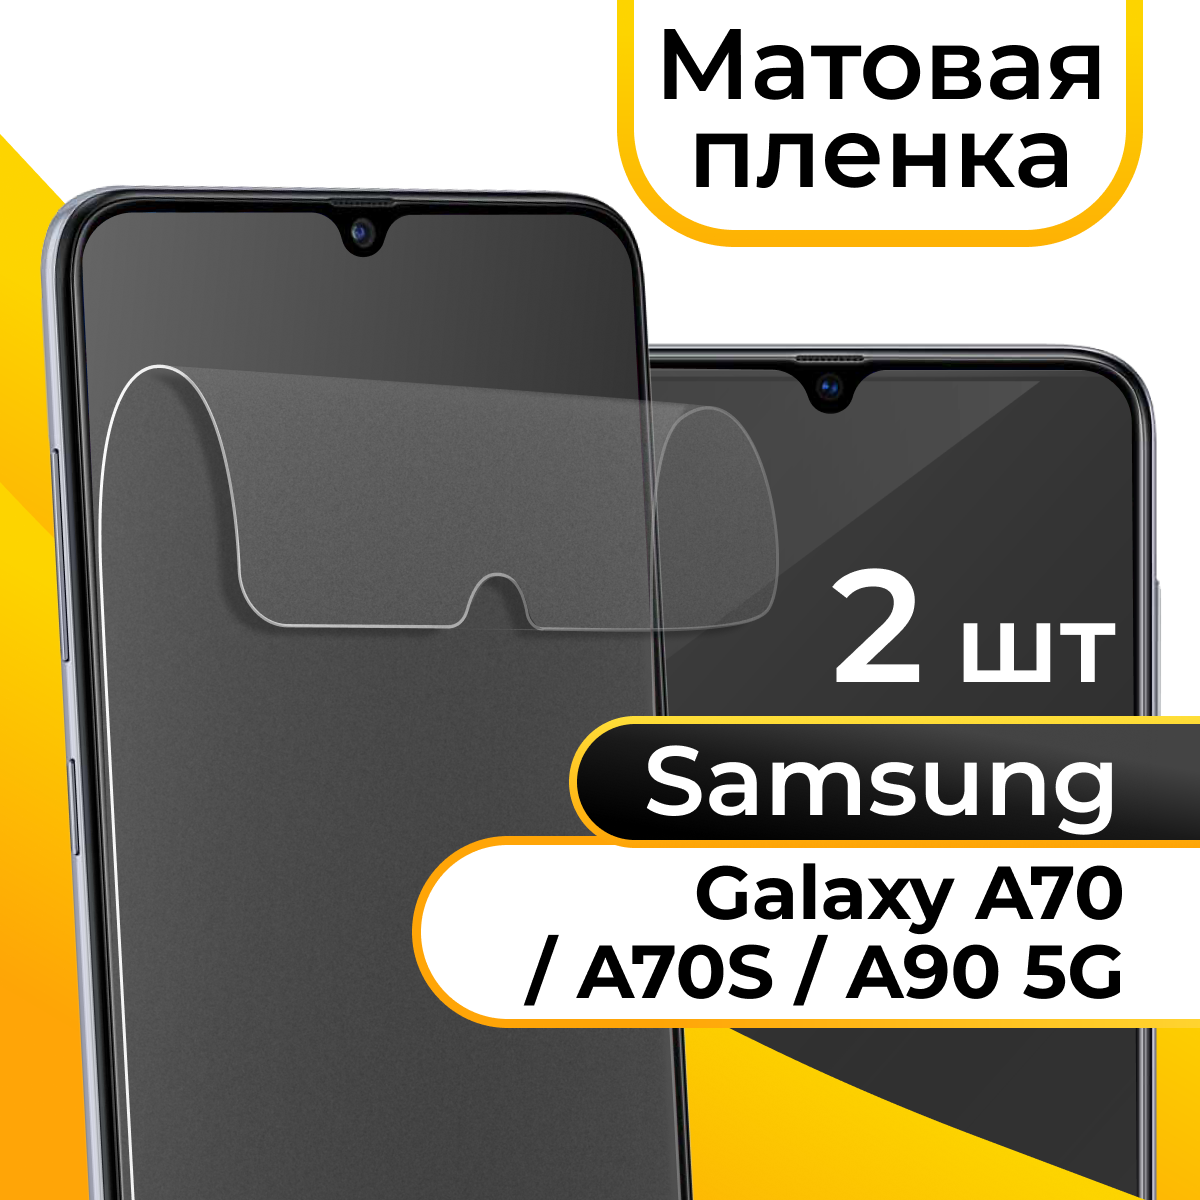 Комплект 2 шт. Матовая пленка для смартфона Samsung Galaxy A70, A70S и A90 5G / Защитная пленка на телефон Самсунг Галакси А70, А70С и А90 5Г / Гидрогелевая пленка